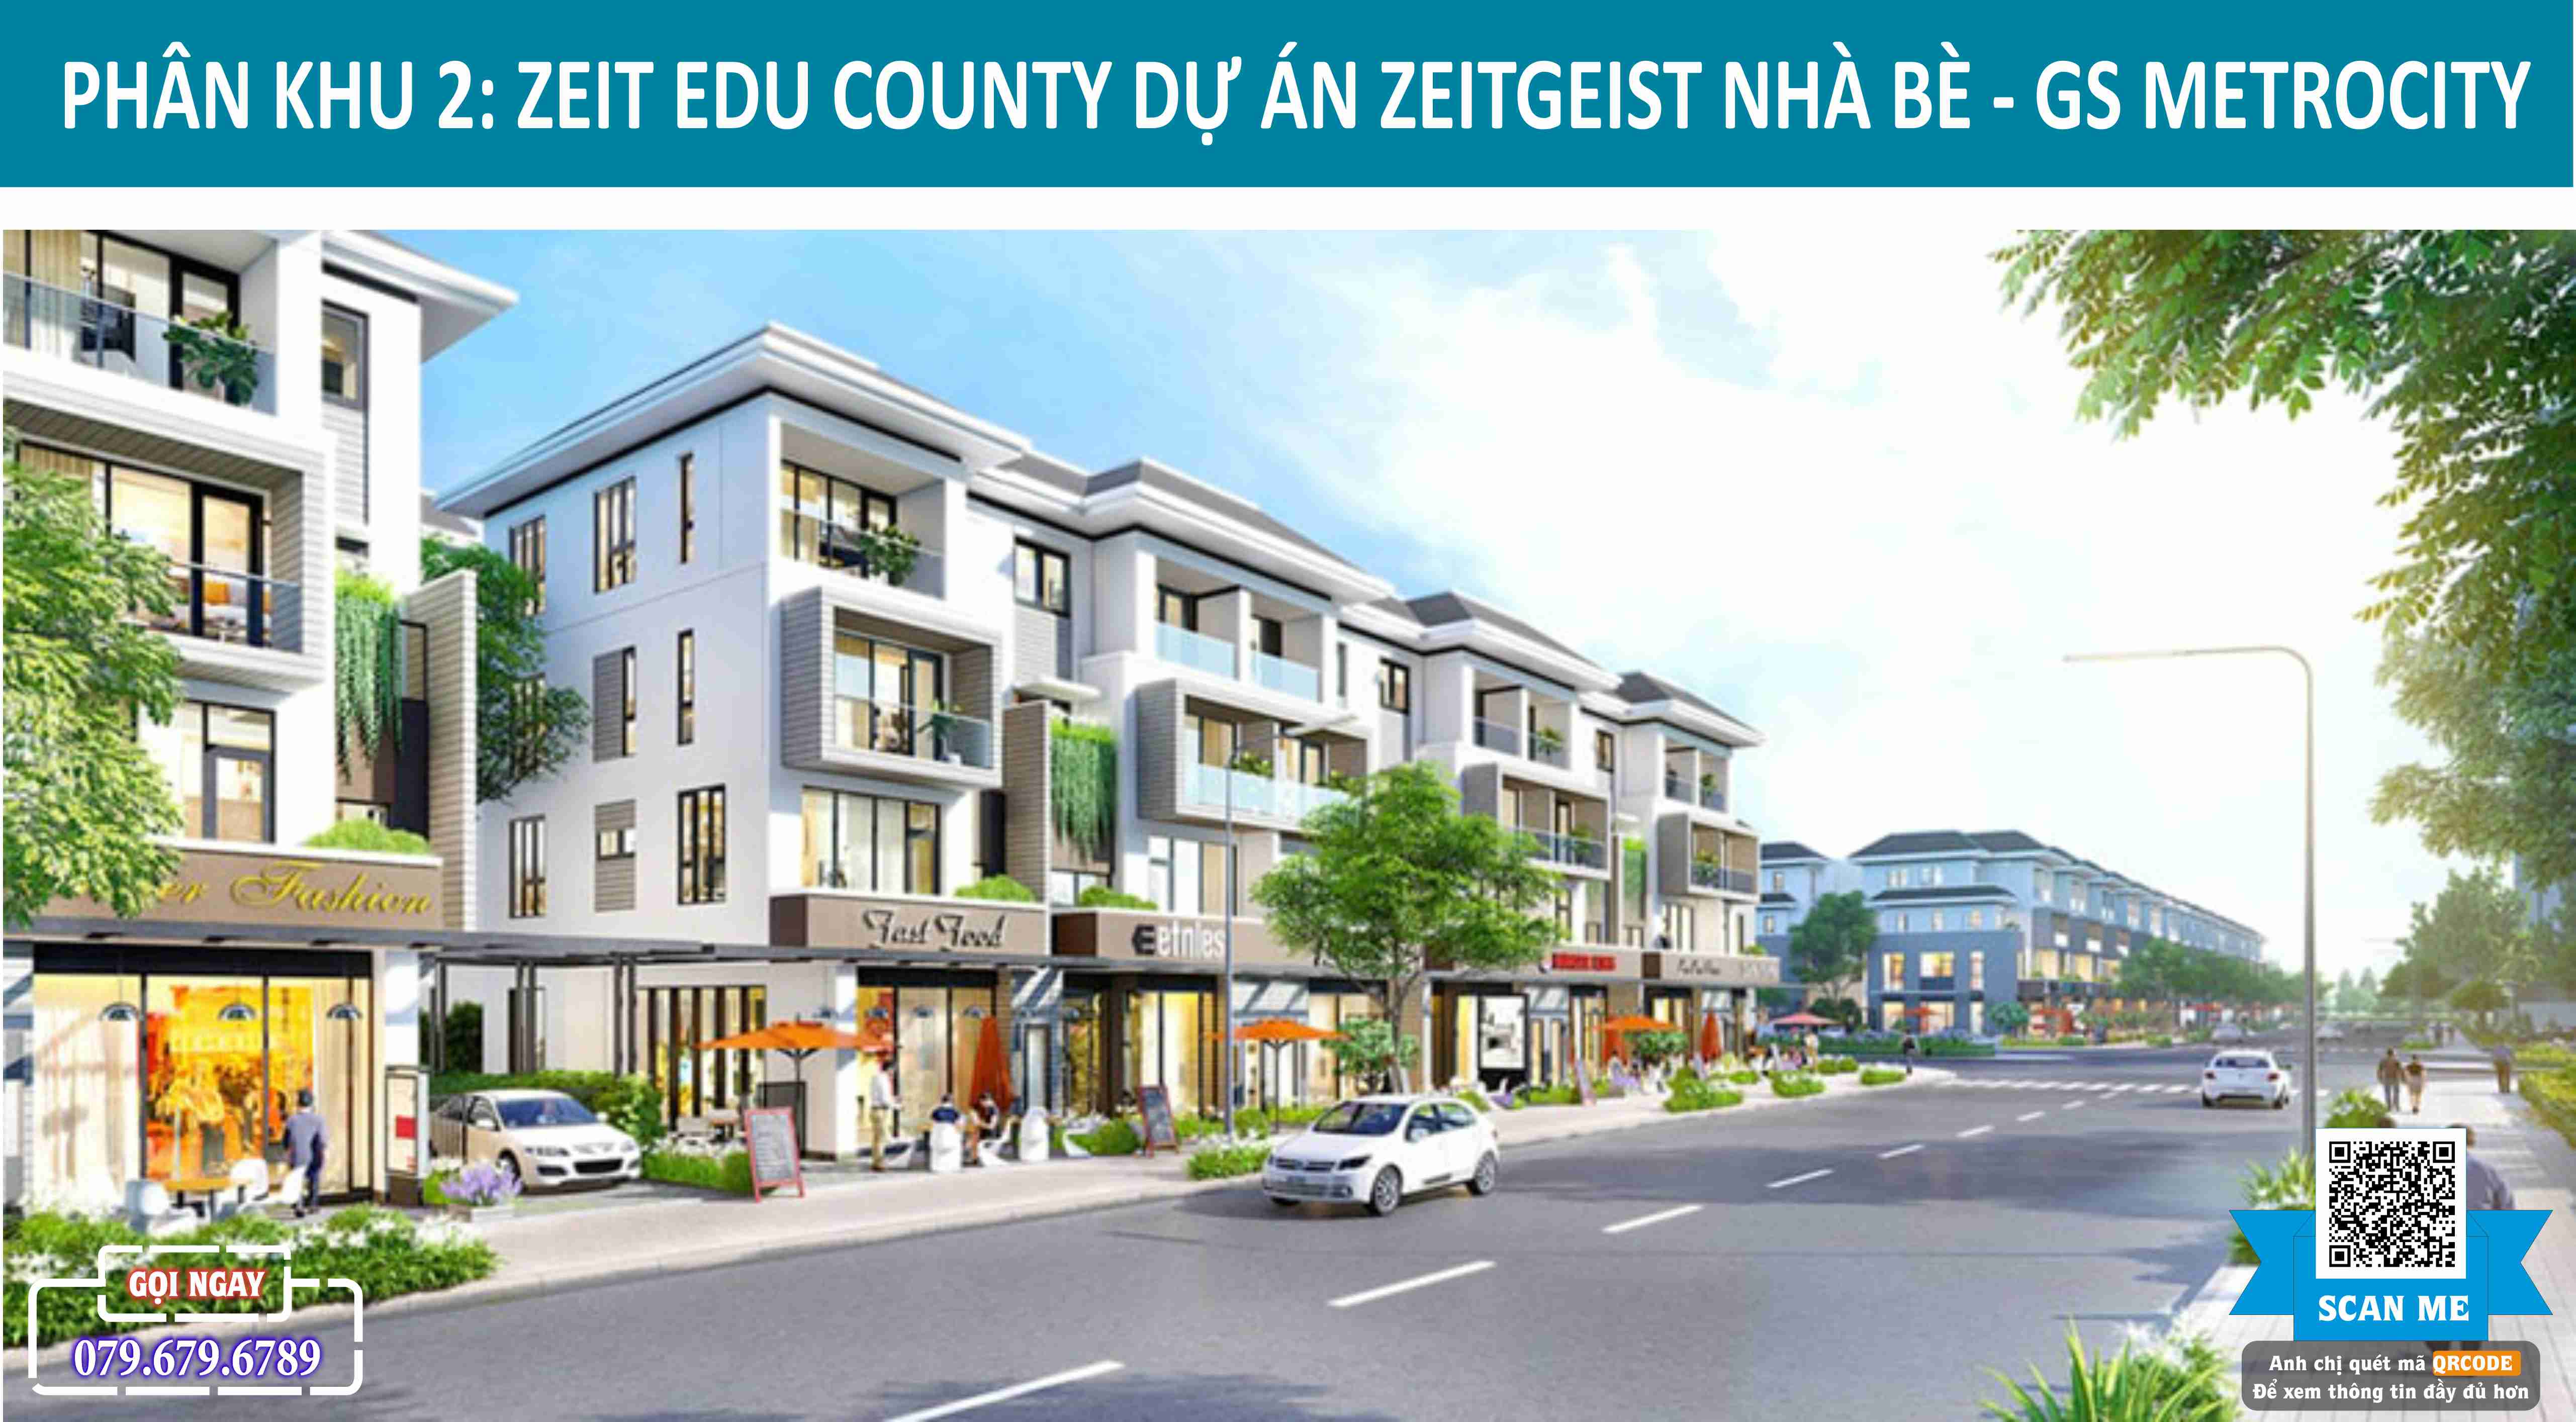 nhà phố Zeit Edu County